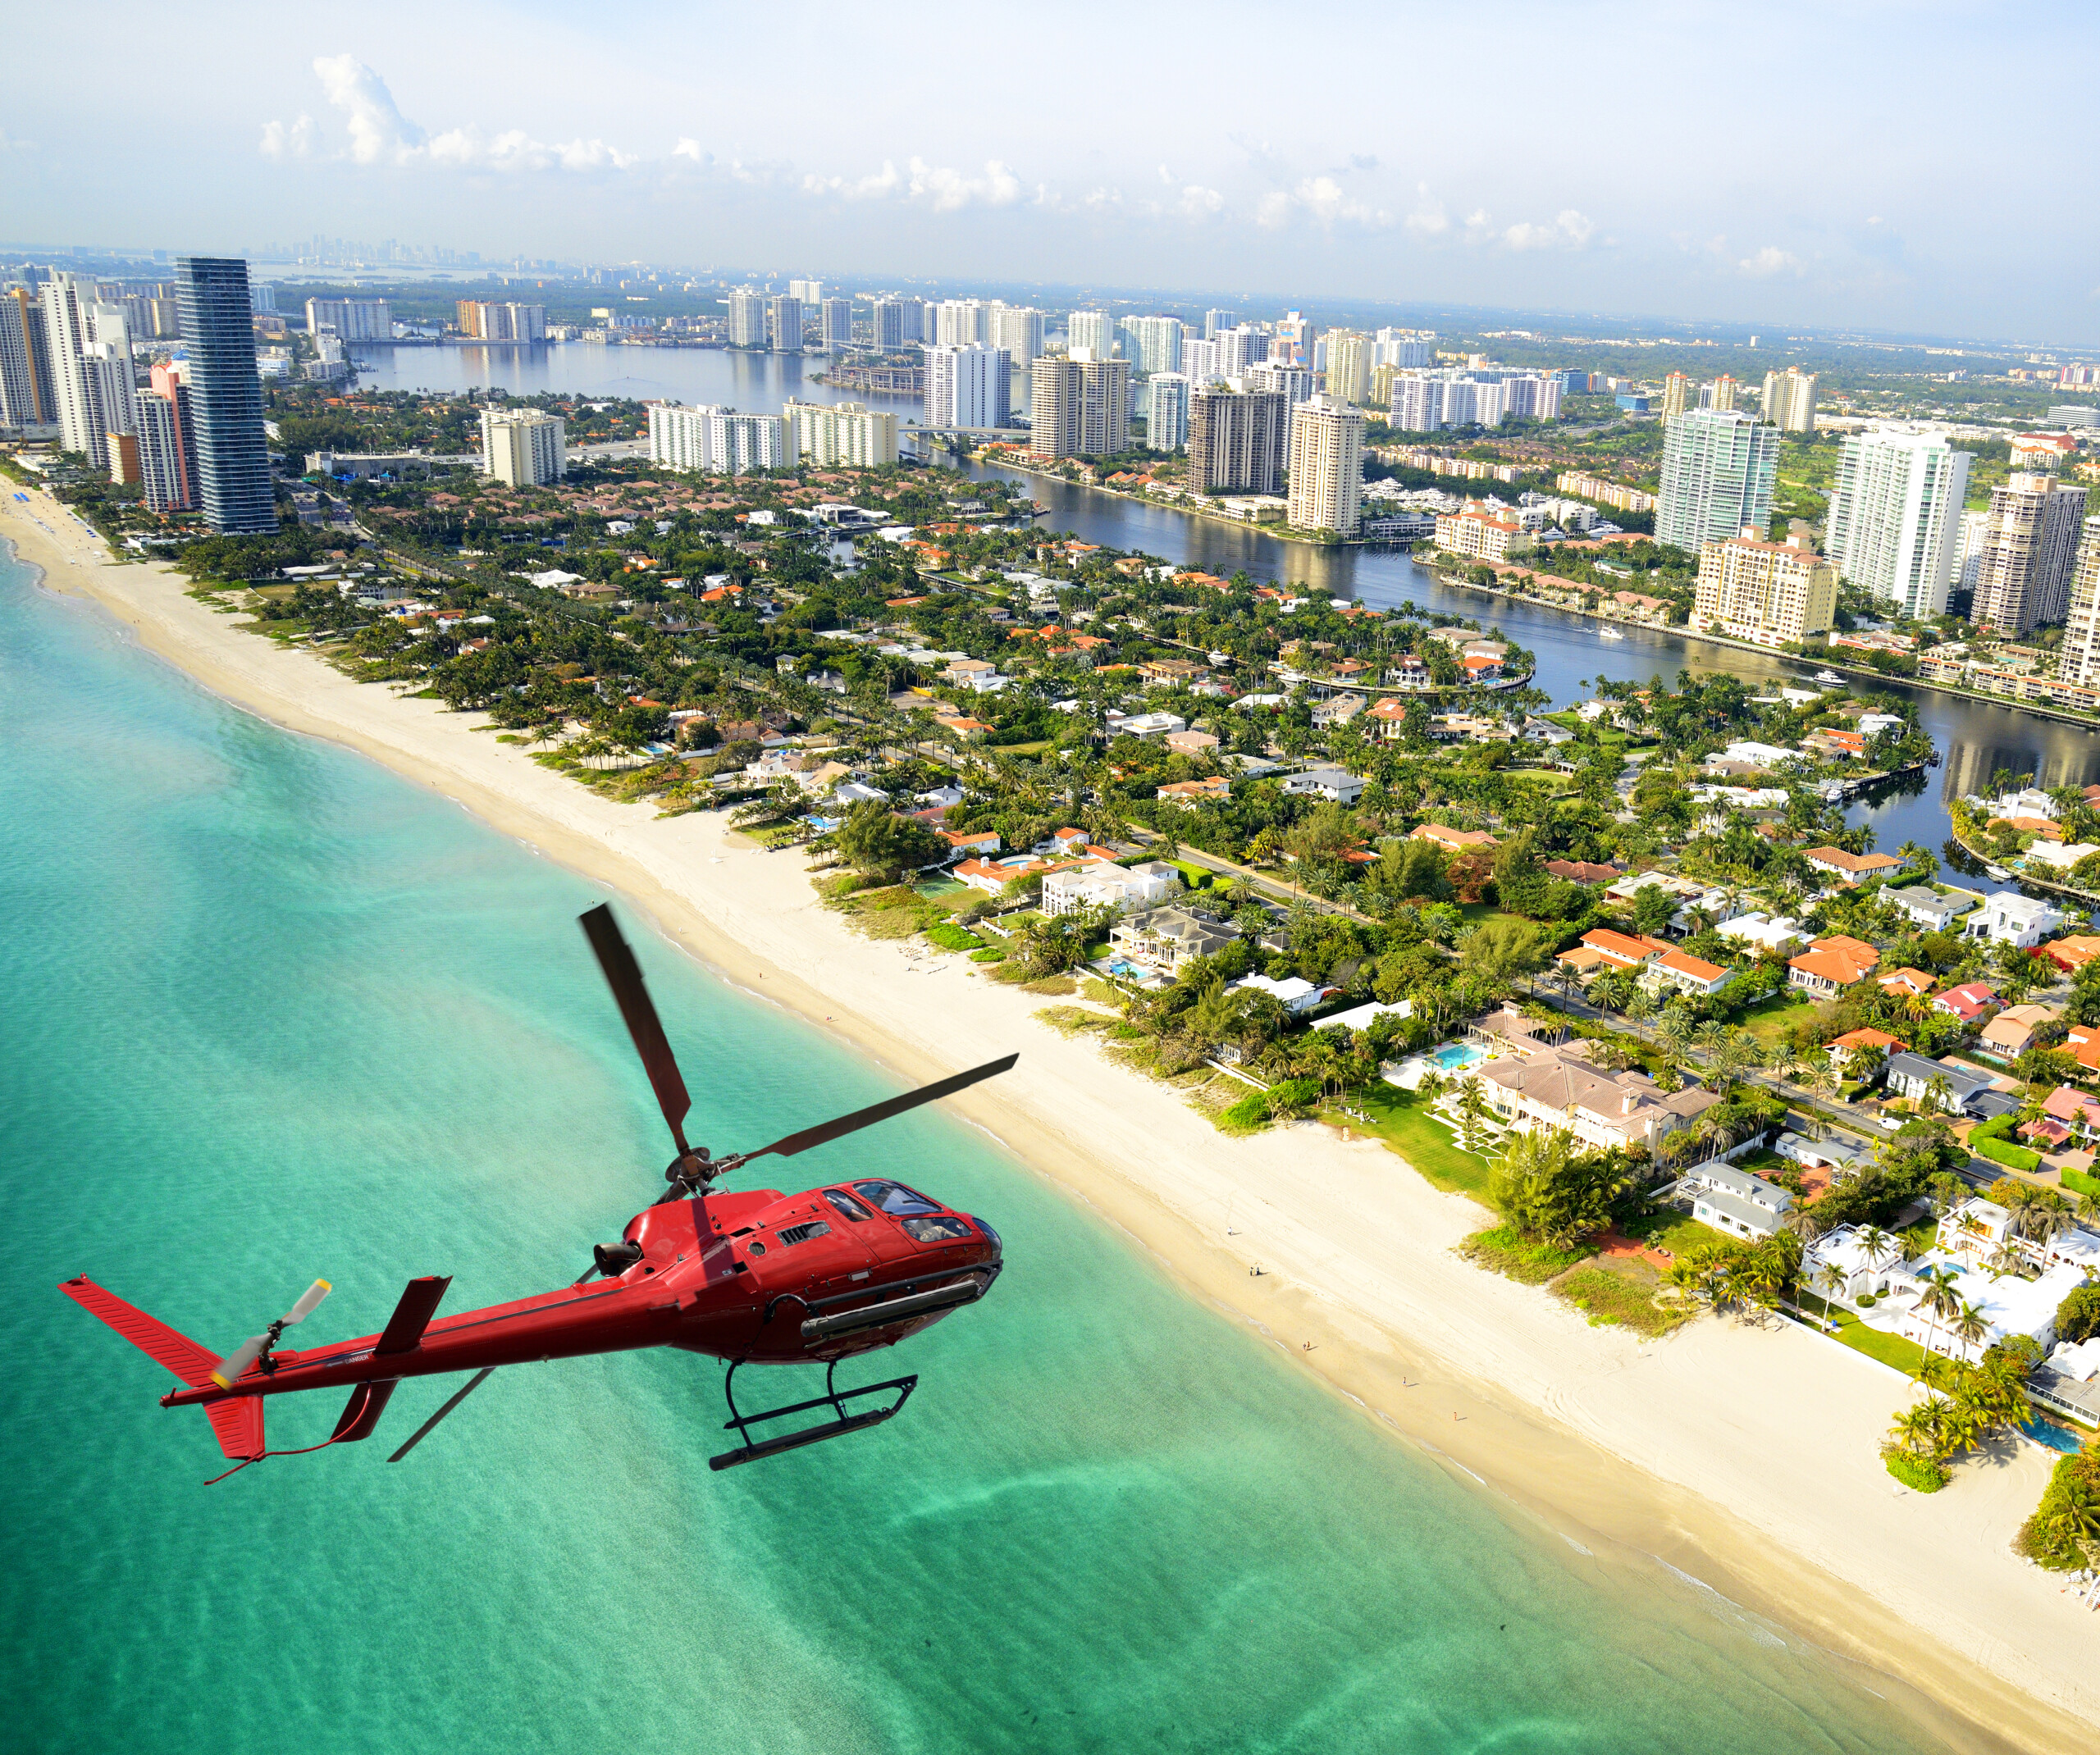 Helikotper nad Miami, Floryda, licencja: shutterstock/By katy89